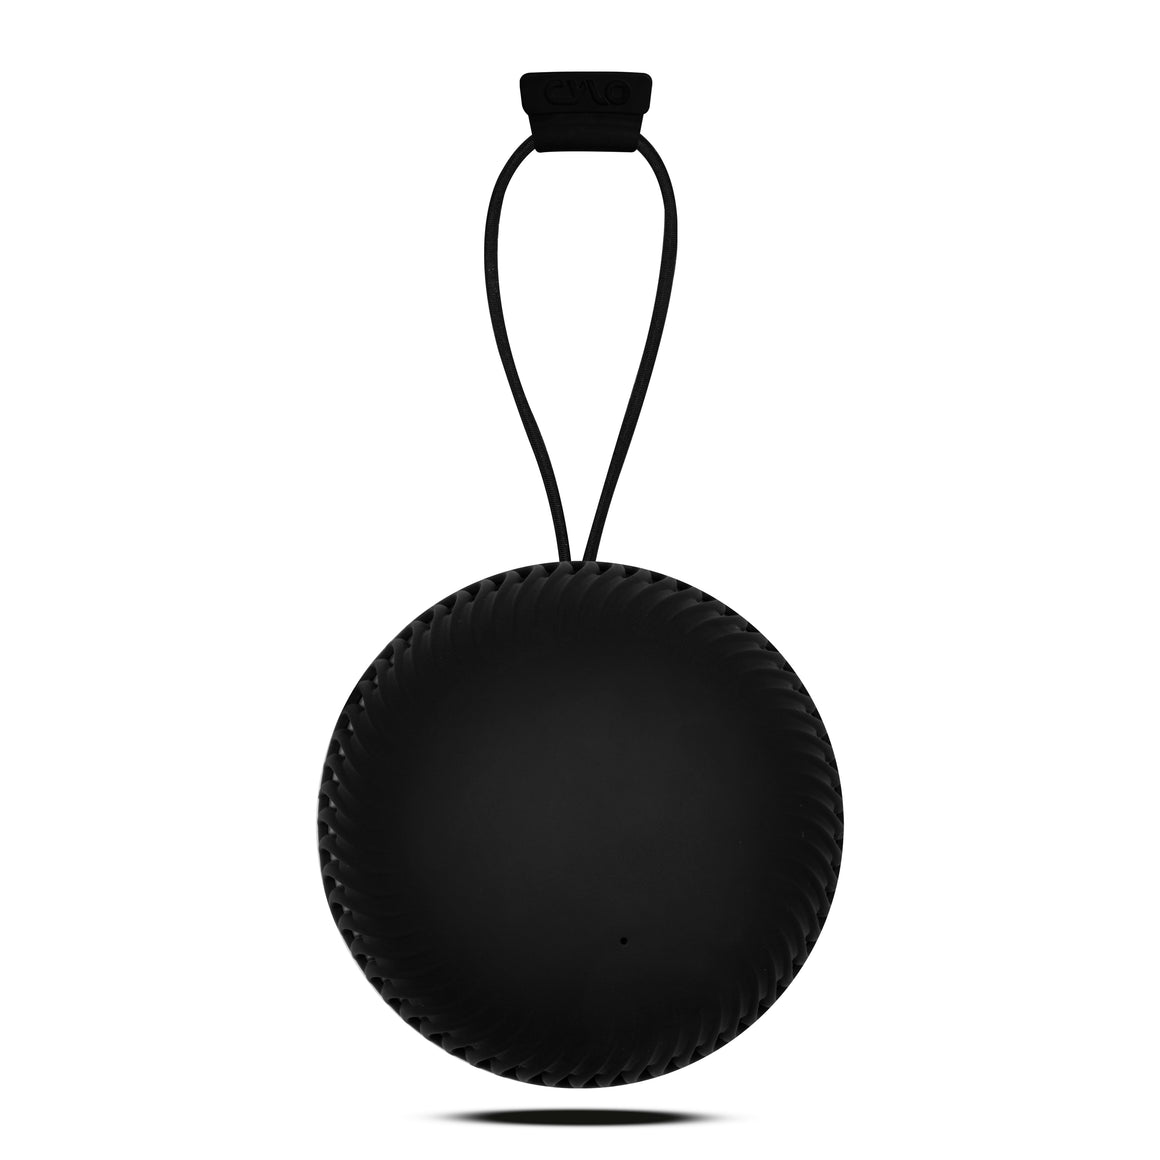 CannonBall IPX7 Rugged & Waterproof Speaker Ball